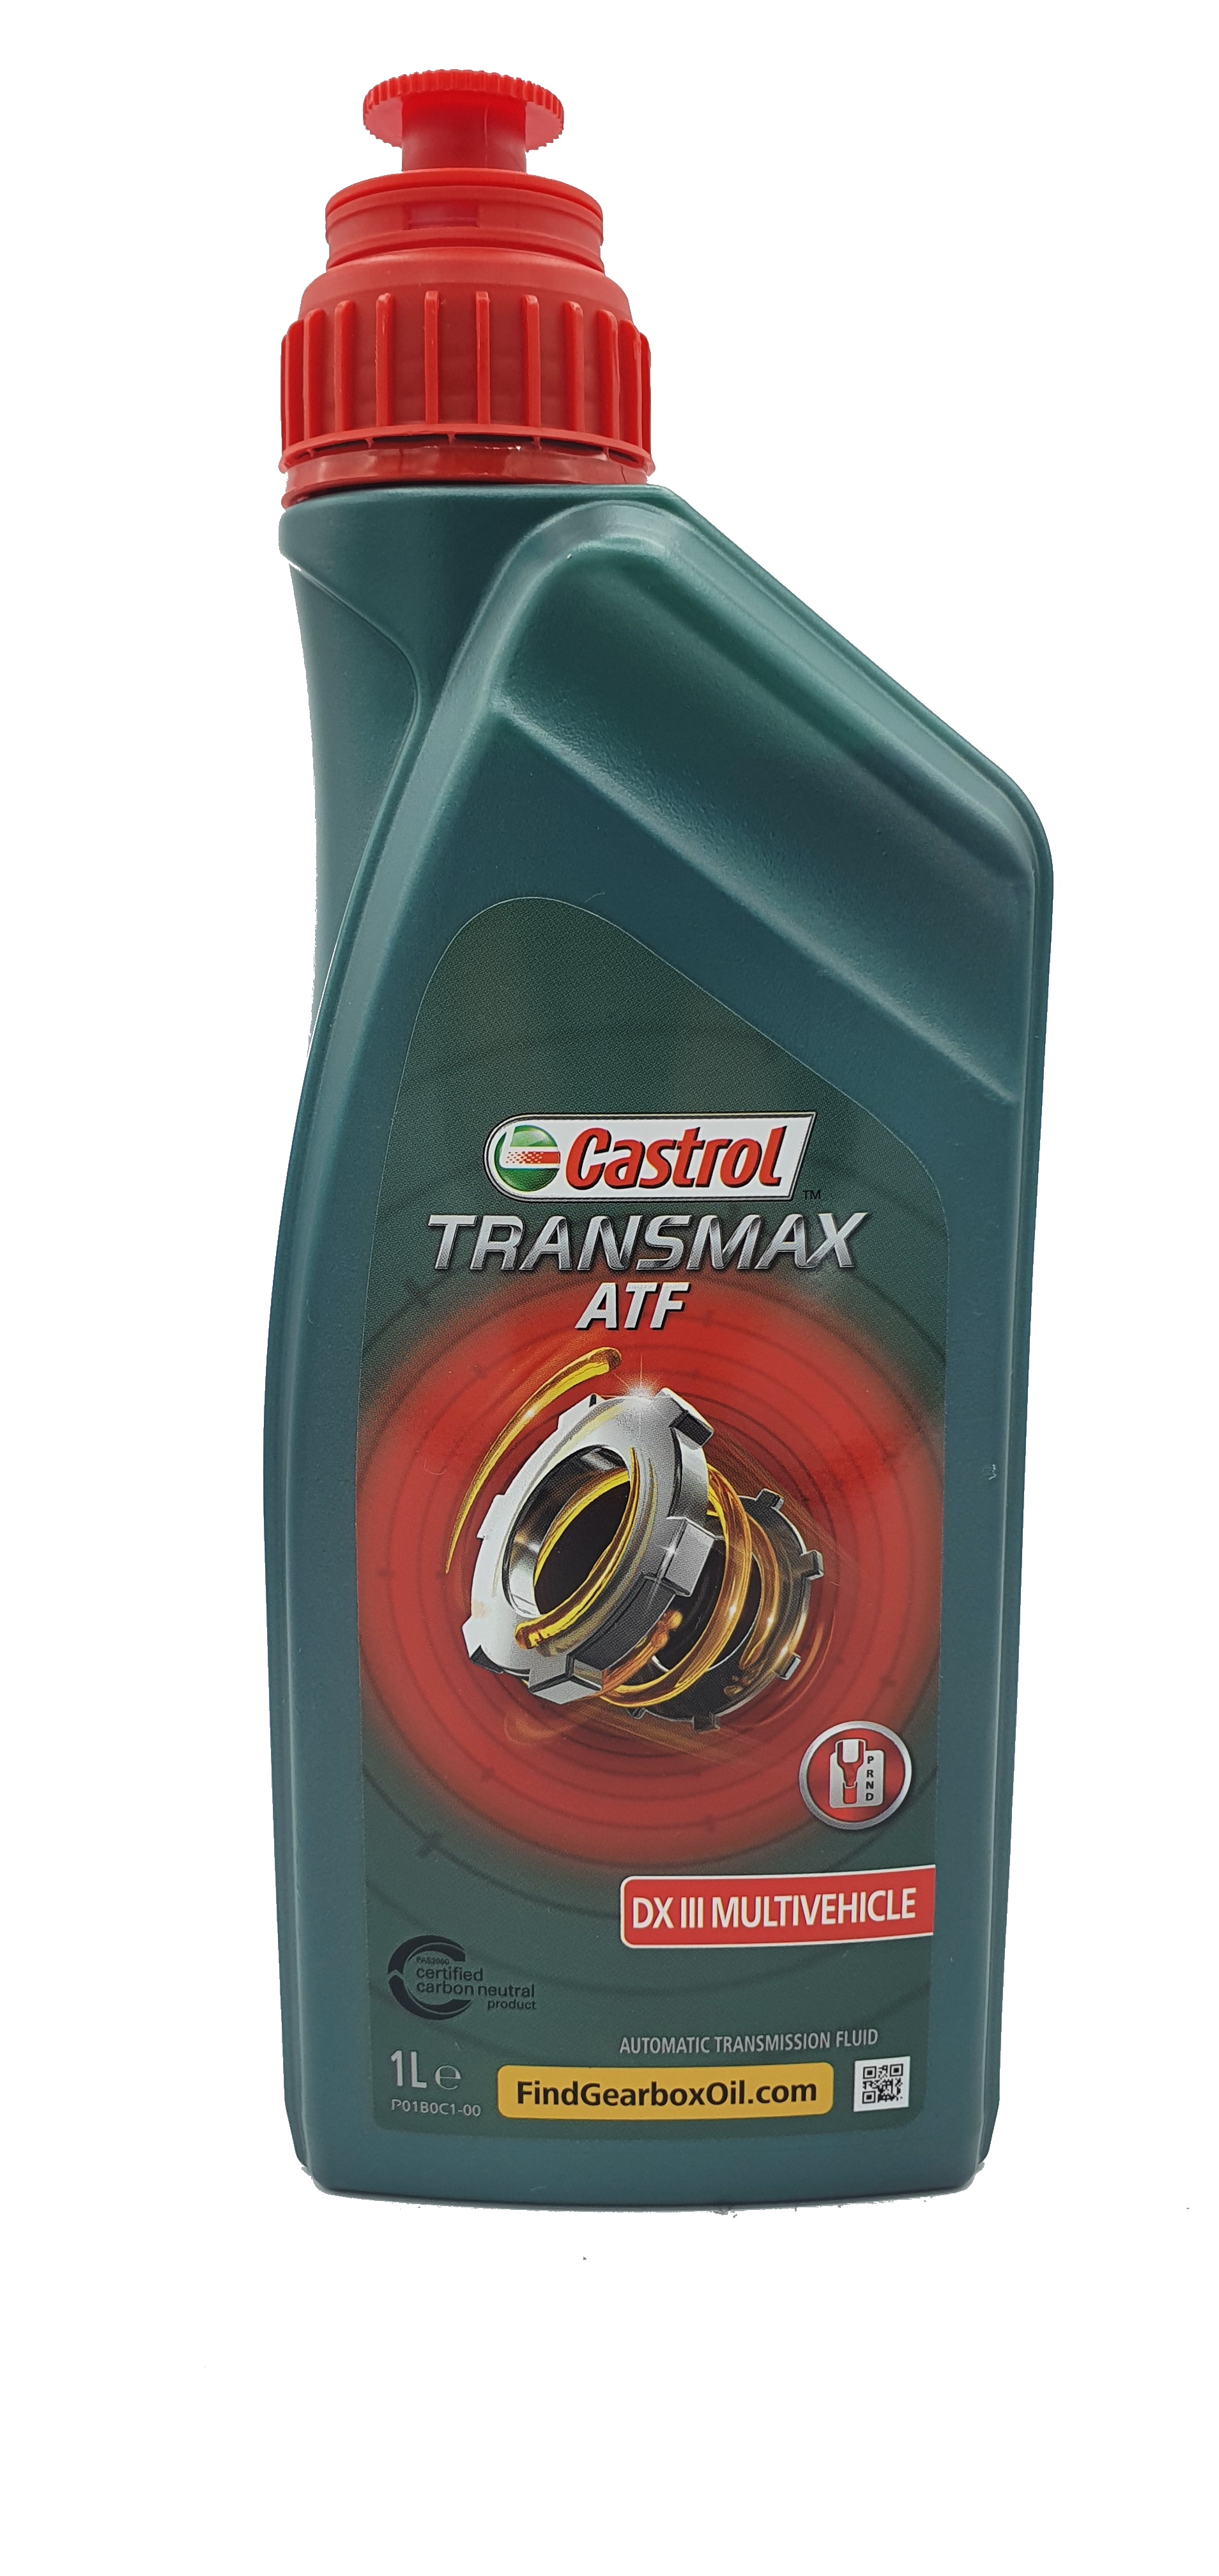 Castrol Transmax ATF DX III Multivehicle 6x1 Liter